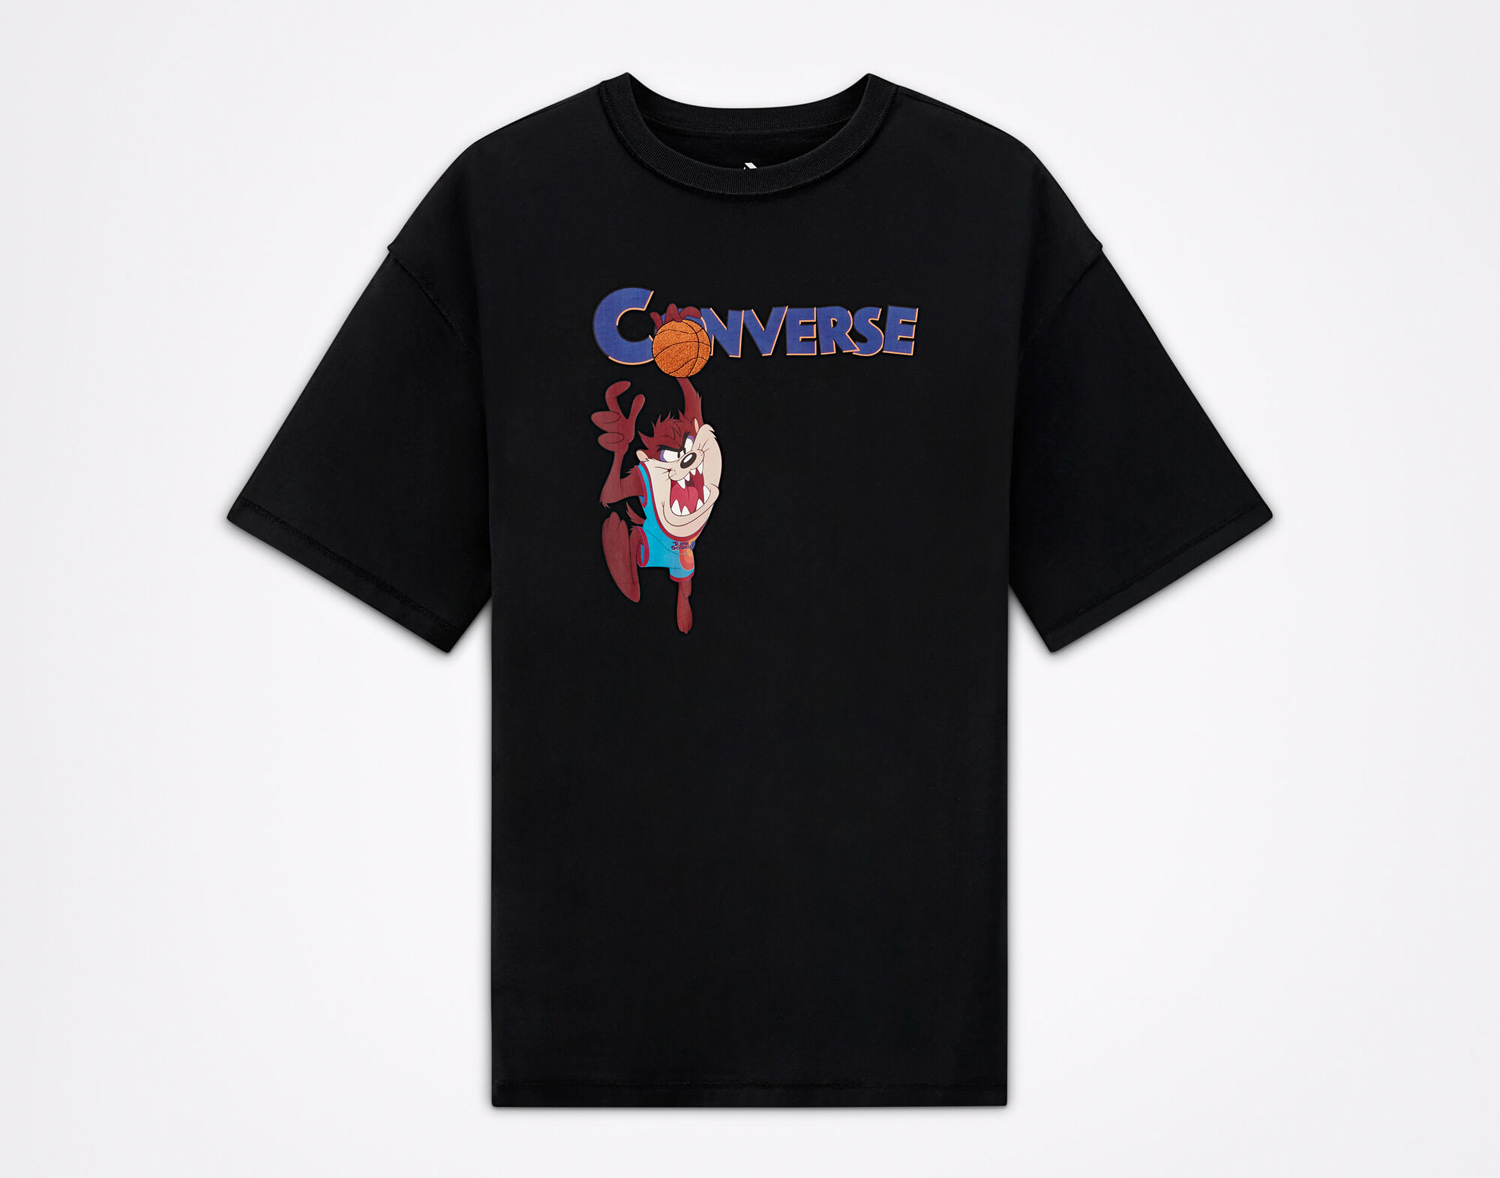 converse-space-jam-tune-squad-taz-shirt